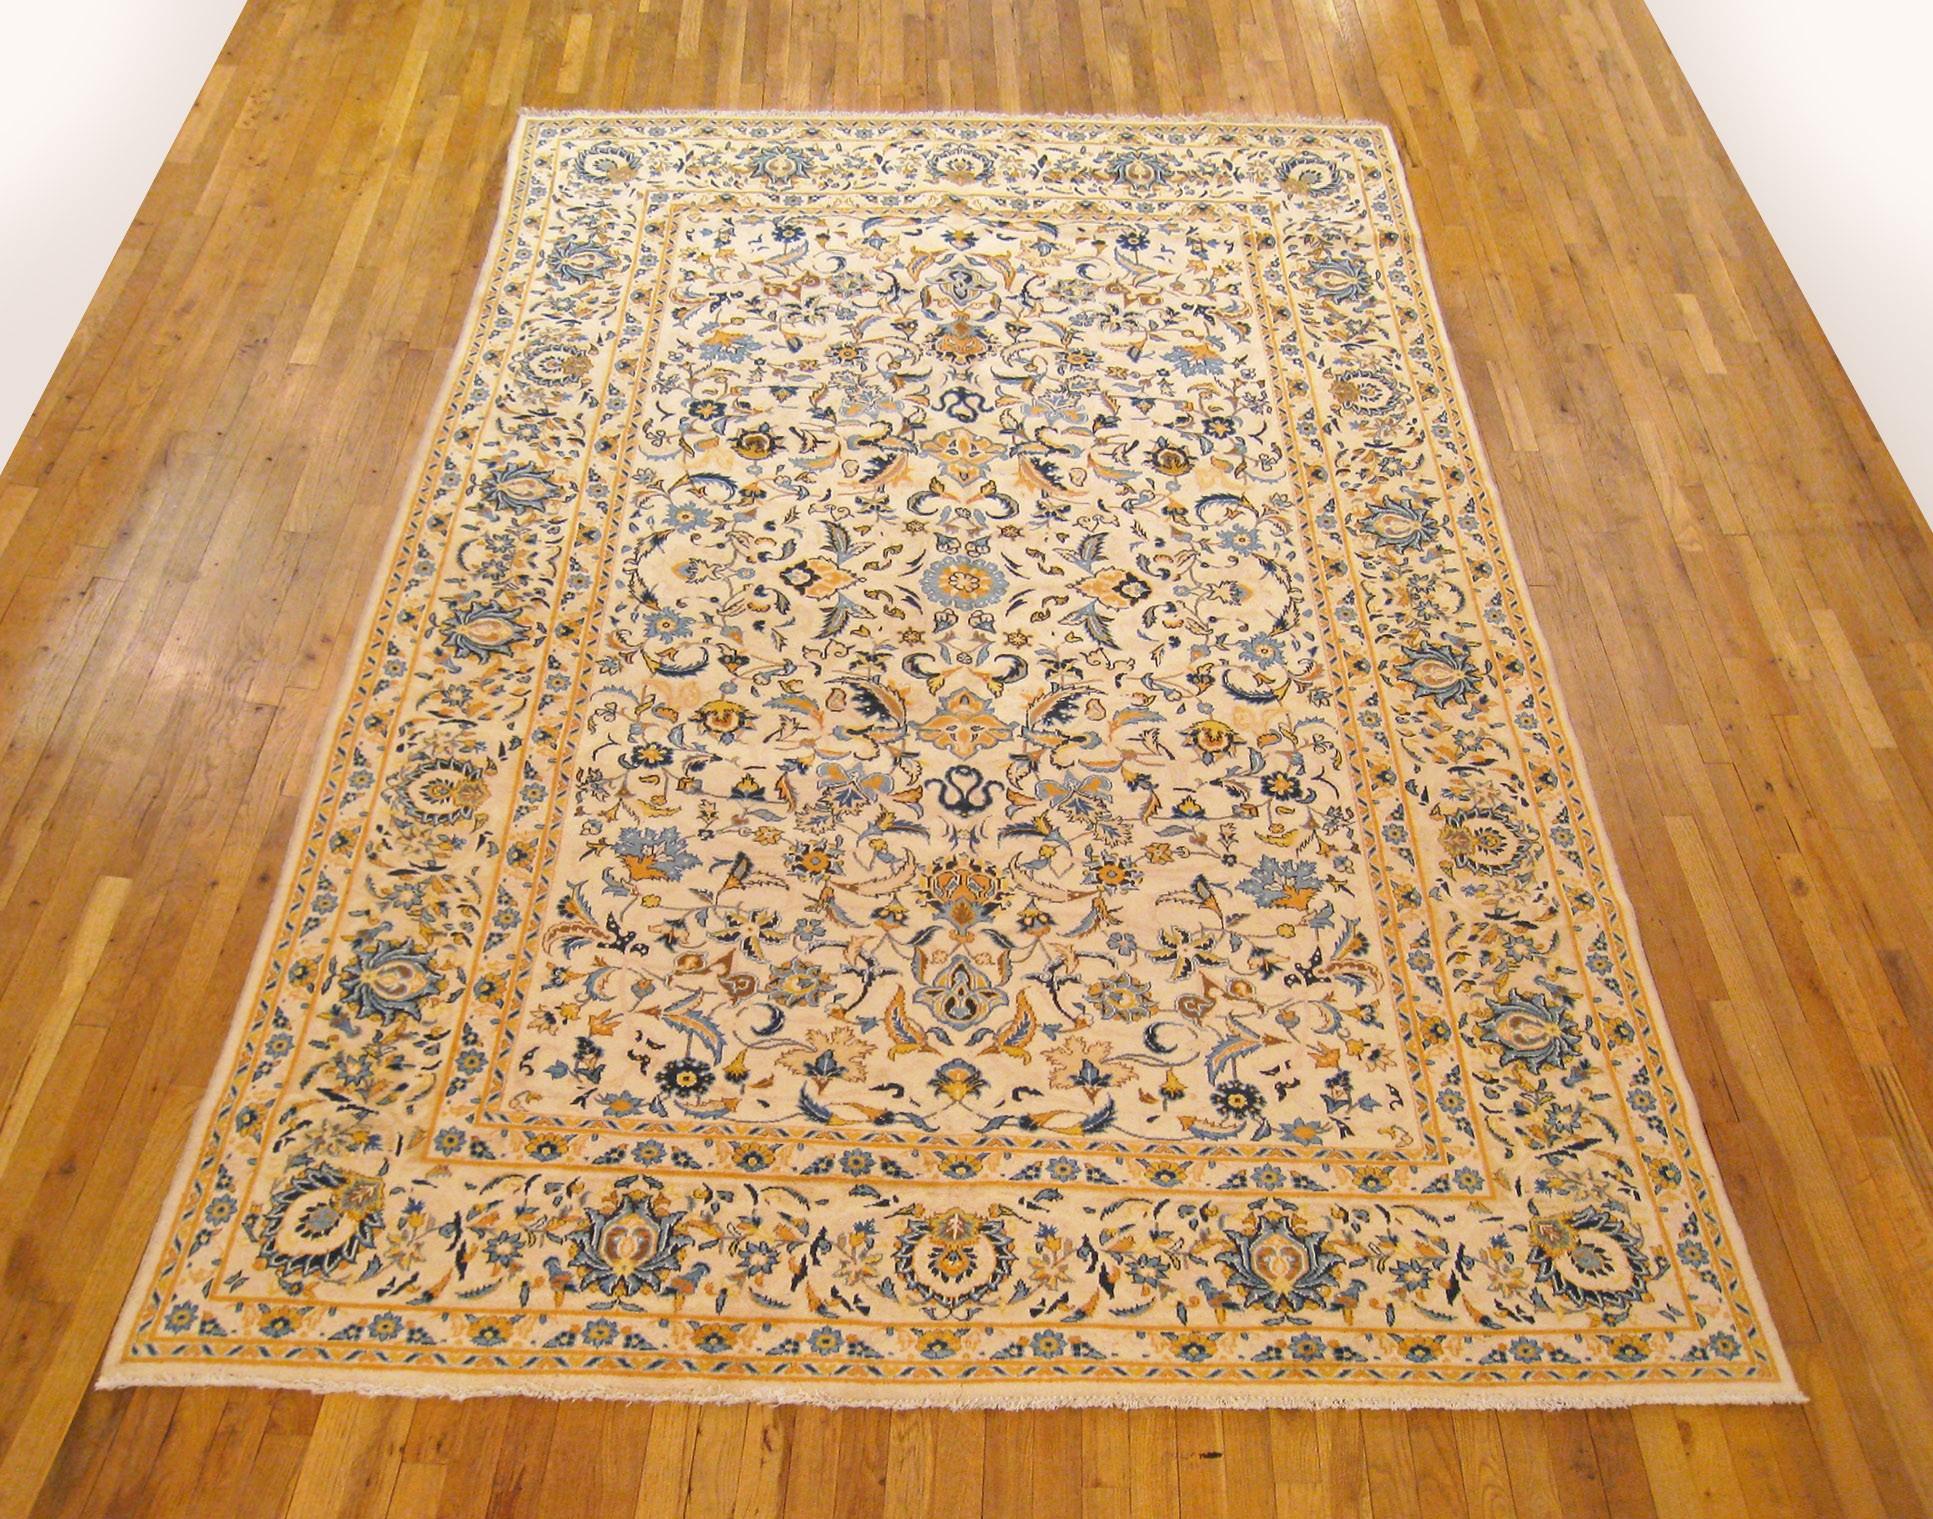 Vintage Persian Kashan Oriental Carpet, in Room Size

An extraordinary vintage Persian Kashan carpet, circa 1950, size 11.0